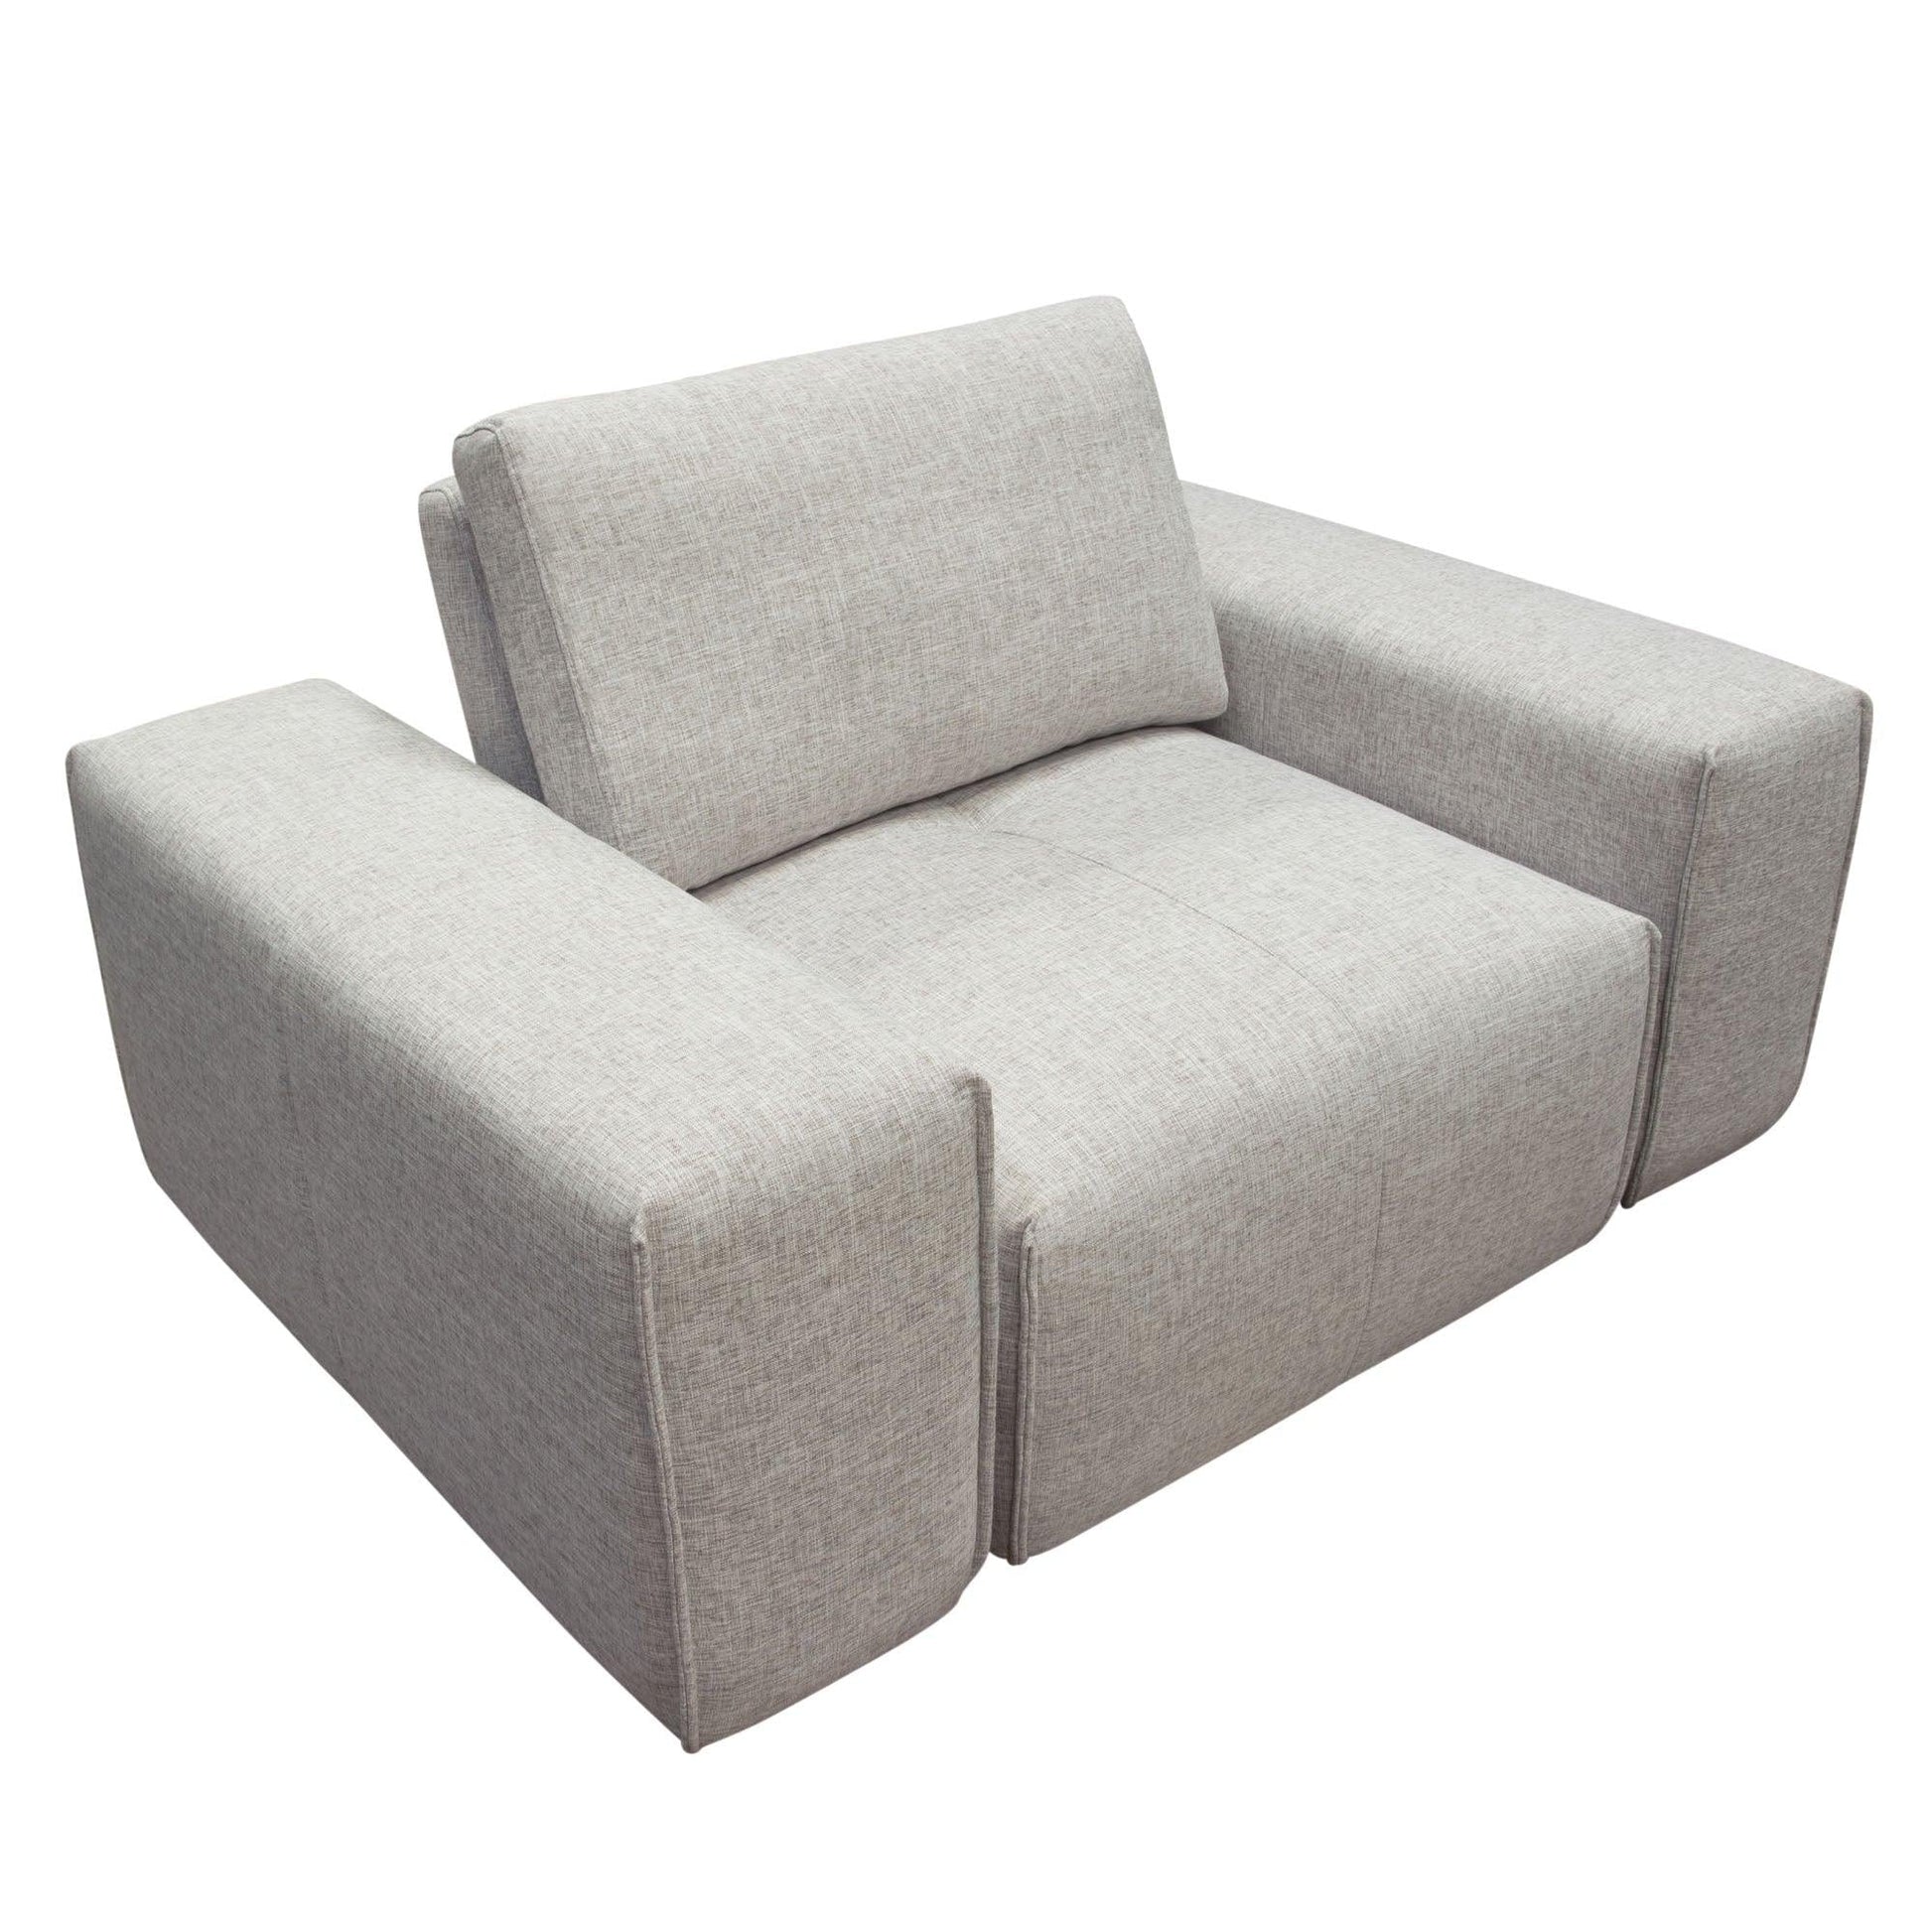 dionefurniture.myshopify.com-Modular Sectional Sofa in Barley Fabric, Dual Position Adjustable Jazz